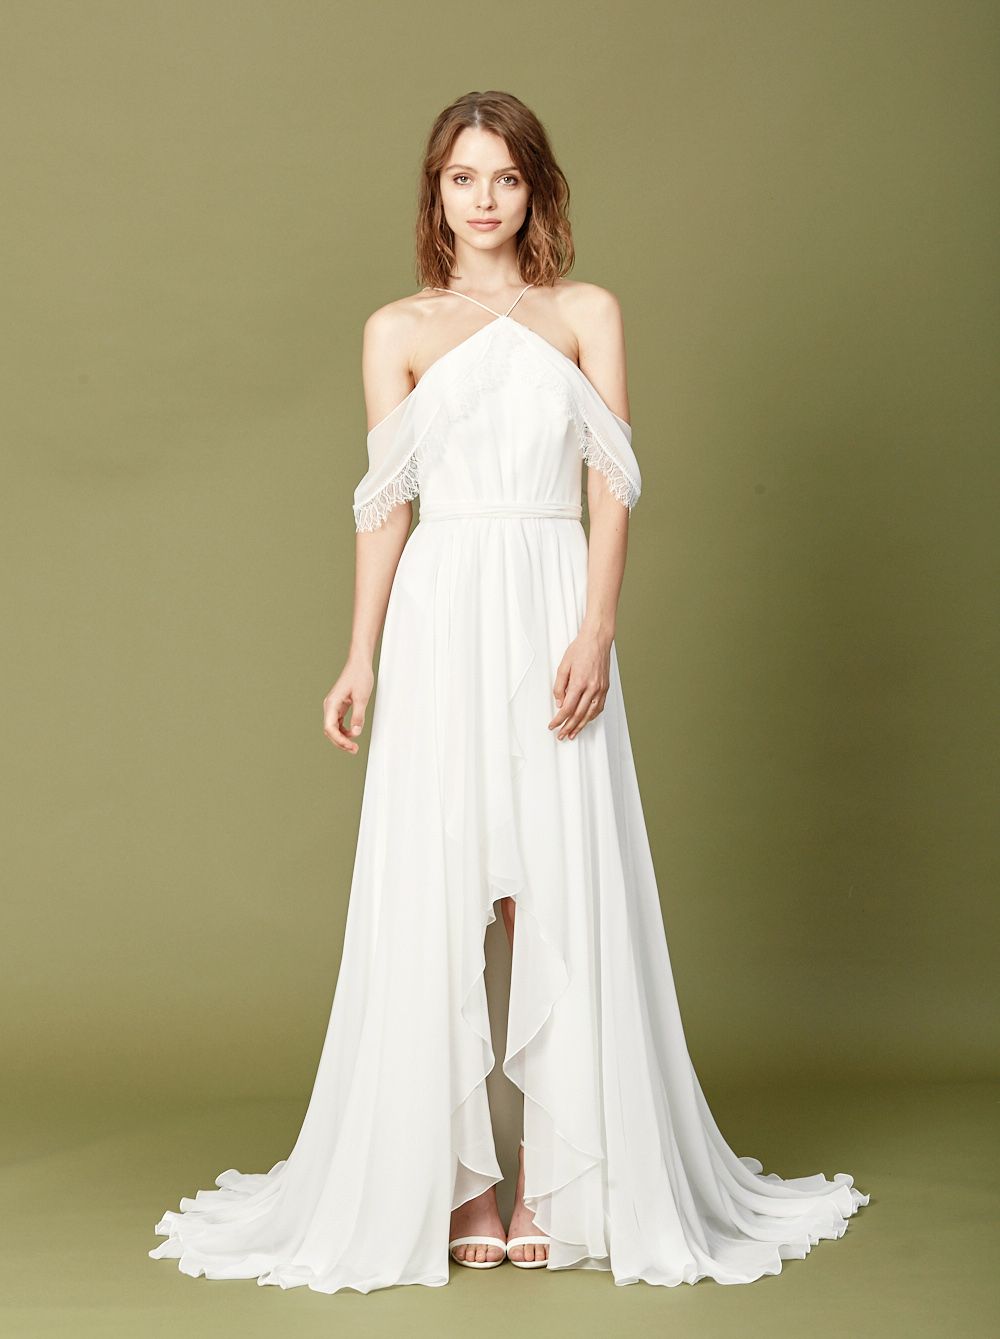 Amsale Christos Fall 2017 Wedding Dress Collection